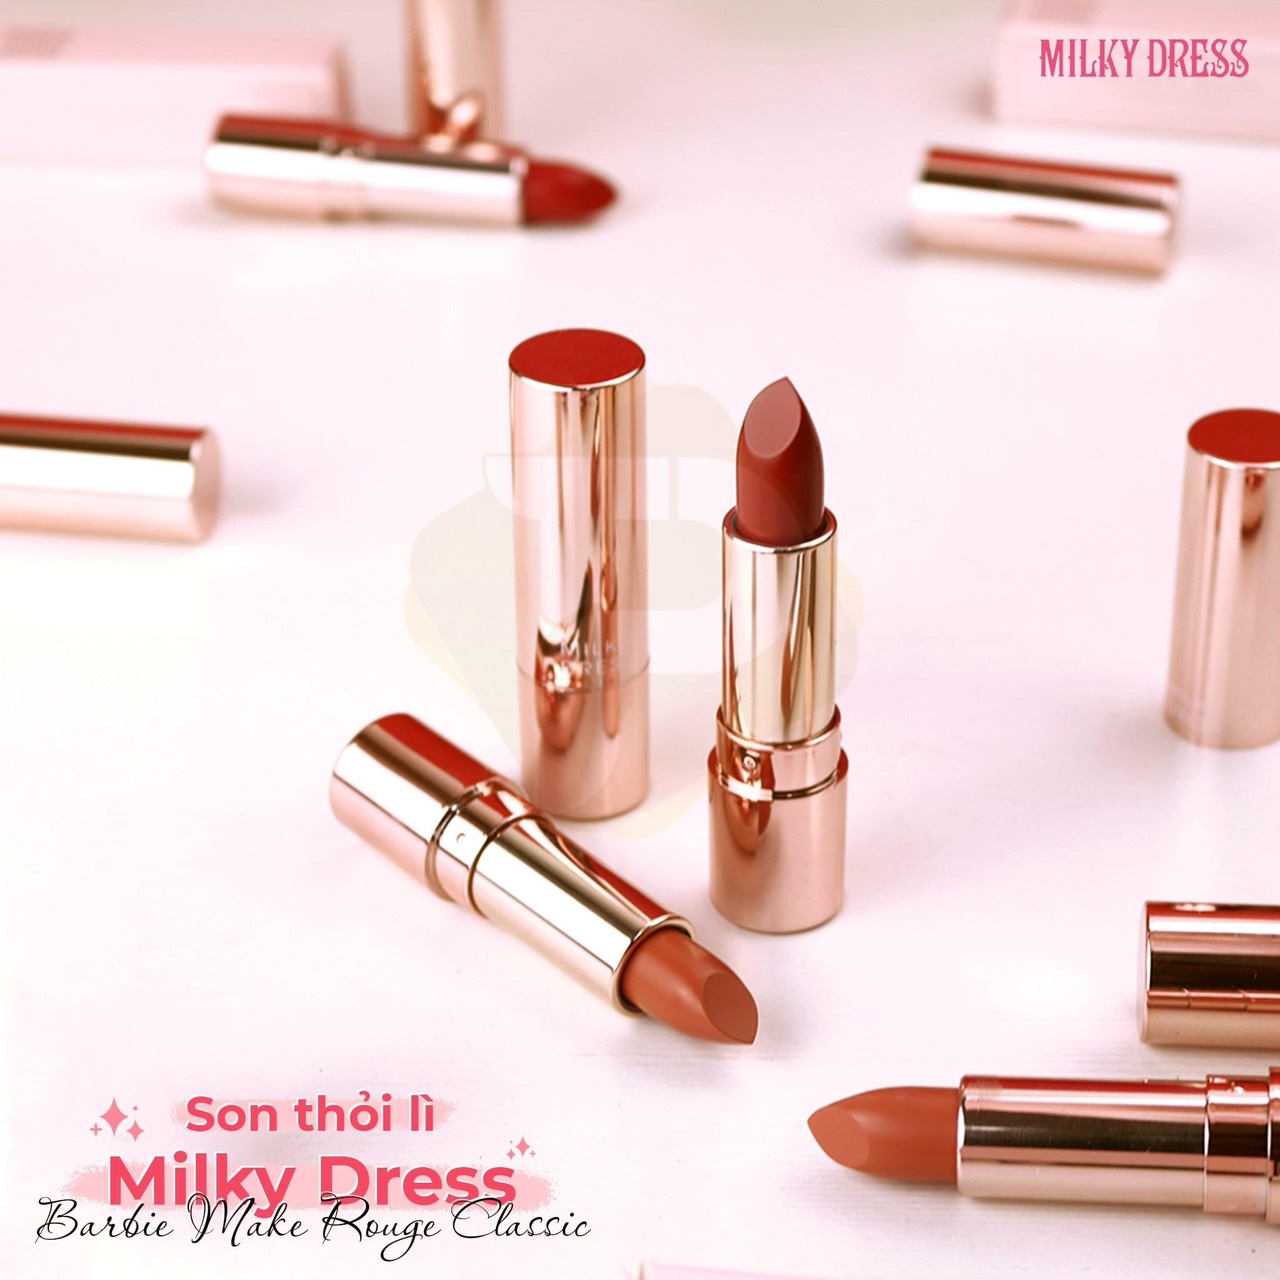 Milky Dress - Son lì Barbie Make Rouge Classic M422